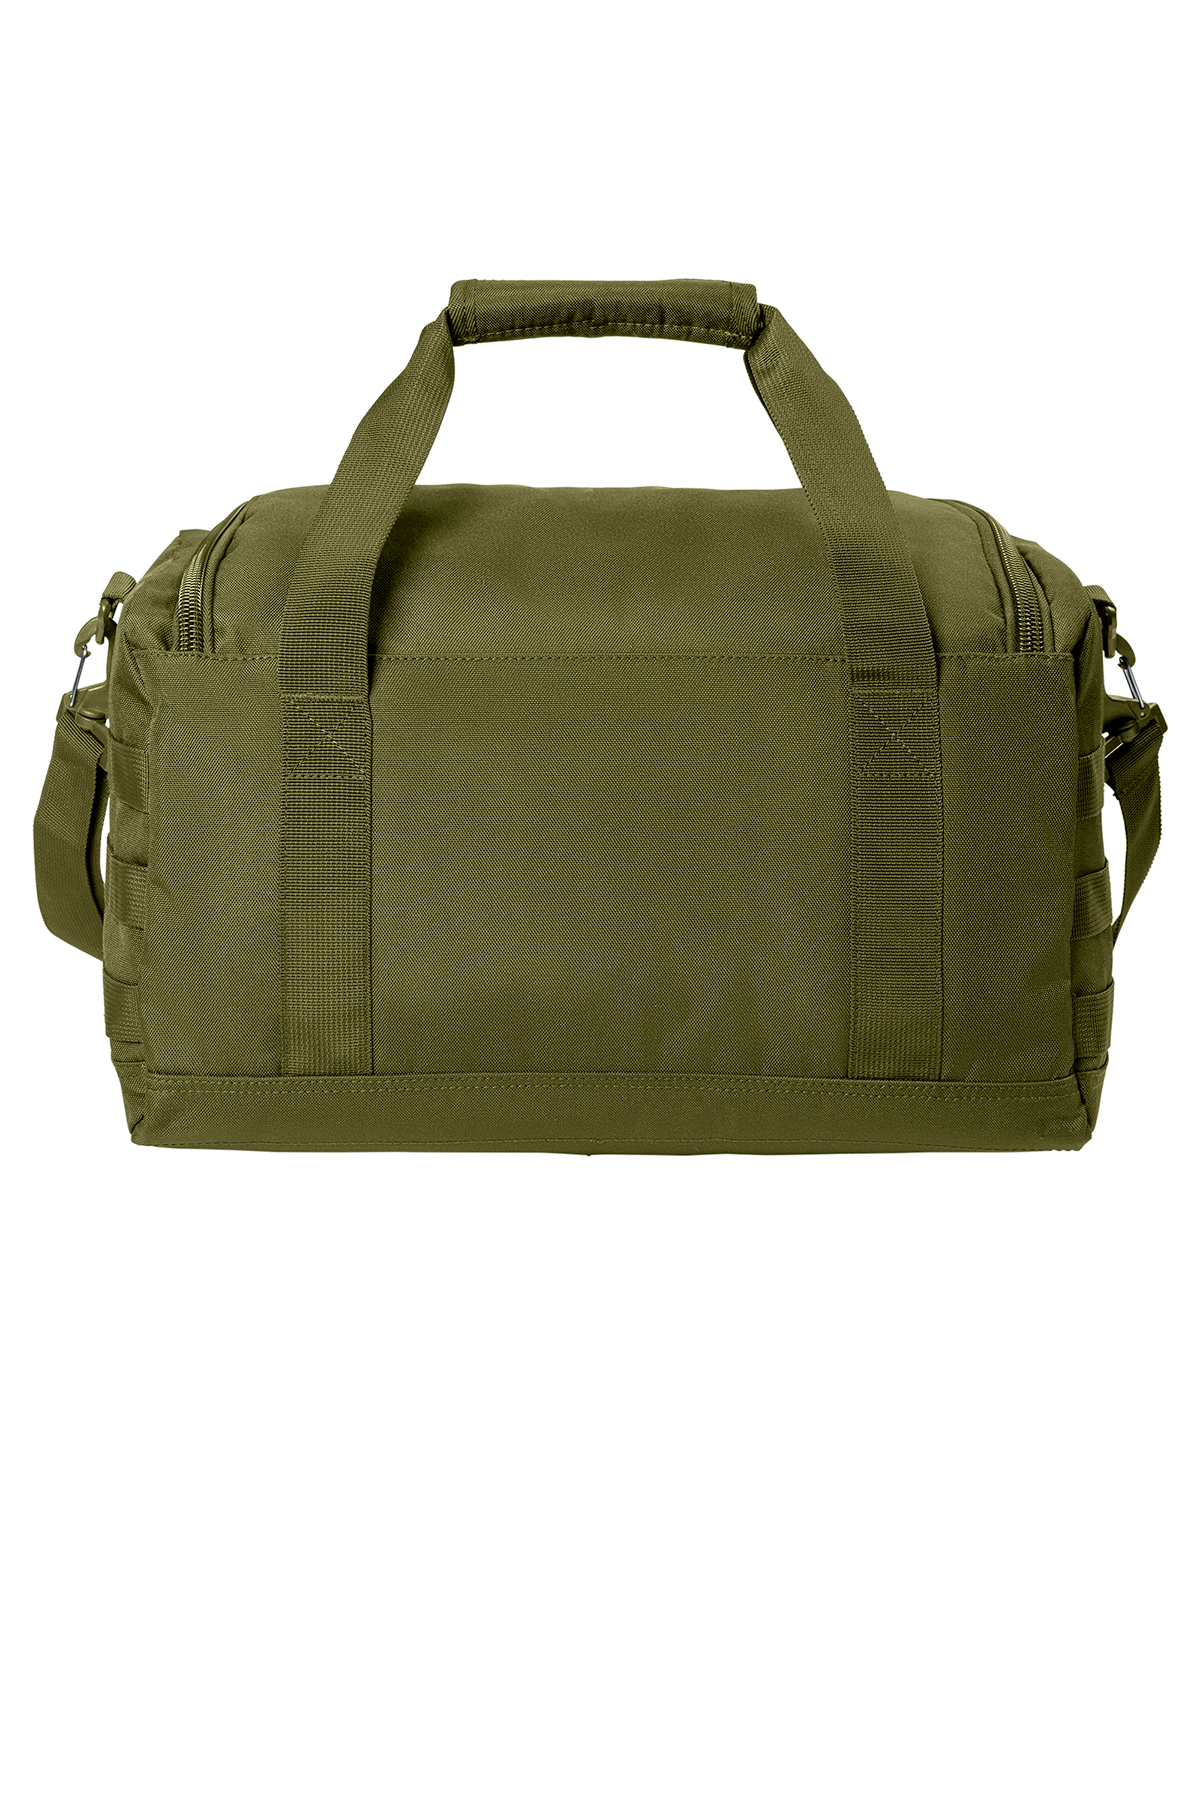 CornerStone Tactical Gear Bag | Product | SanMar